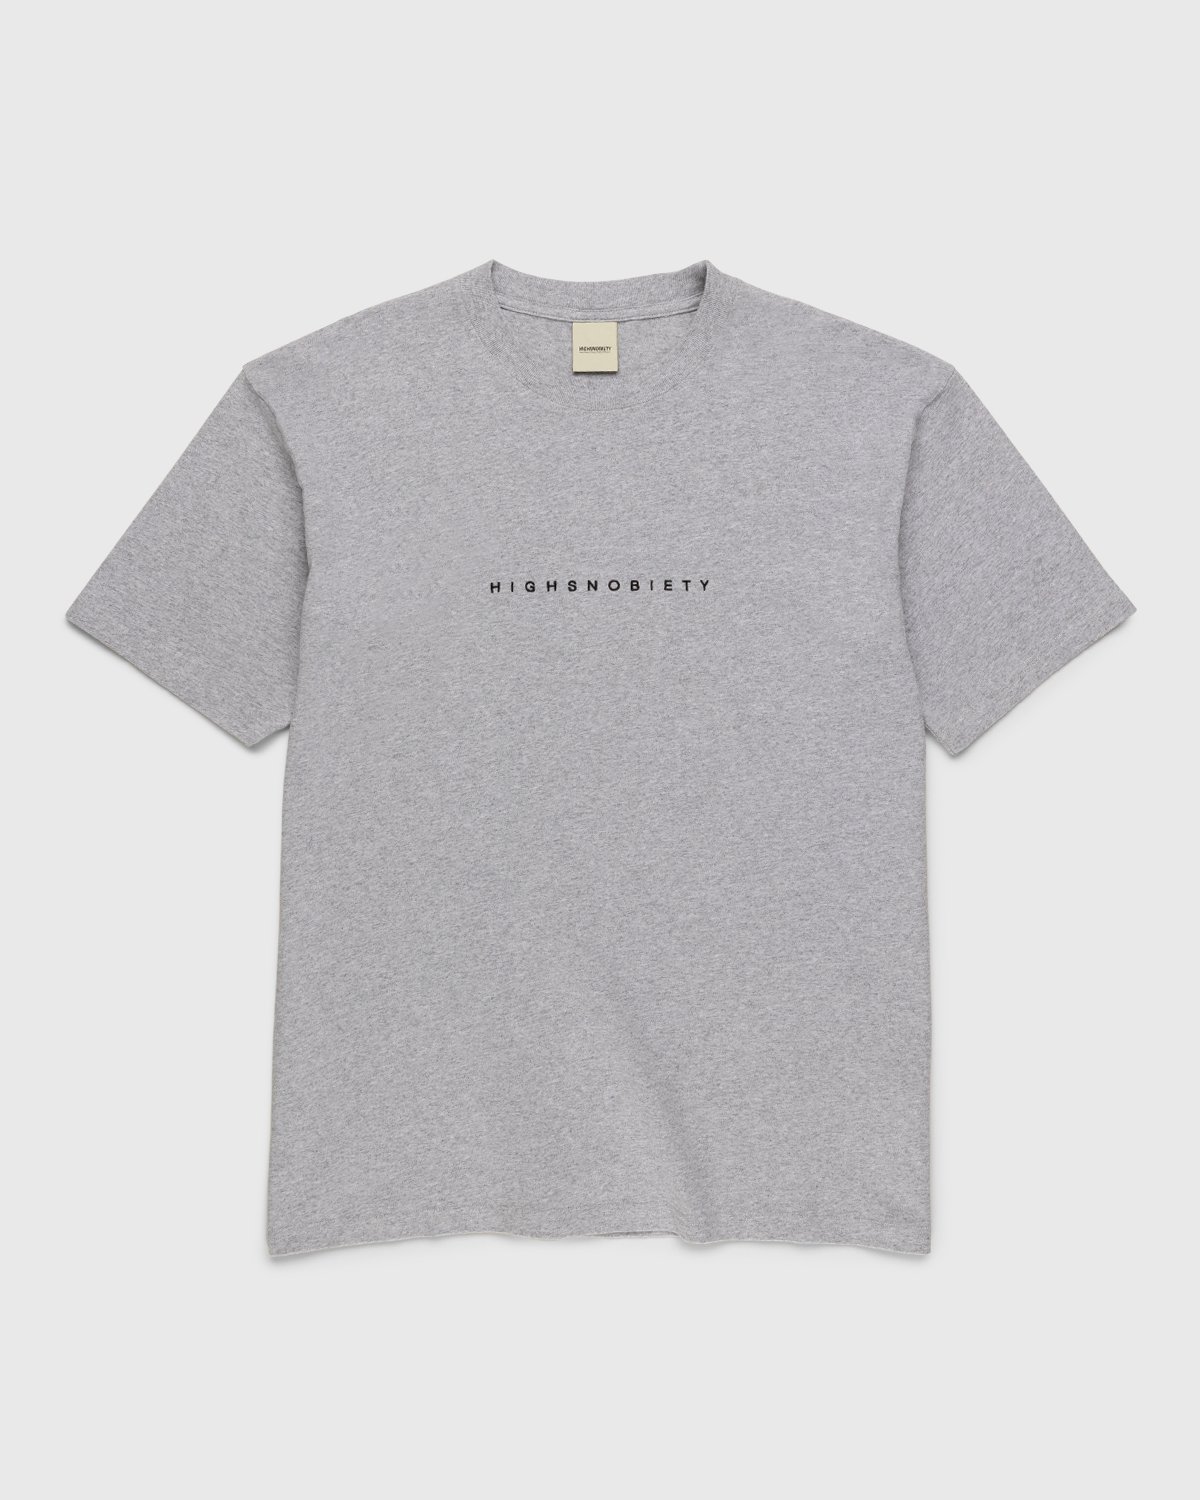 Highsnobiety - Staples T-Shirt Heather Grey - Clothing - Grey - Image 1